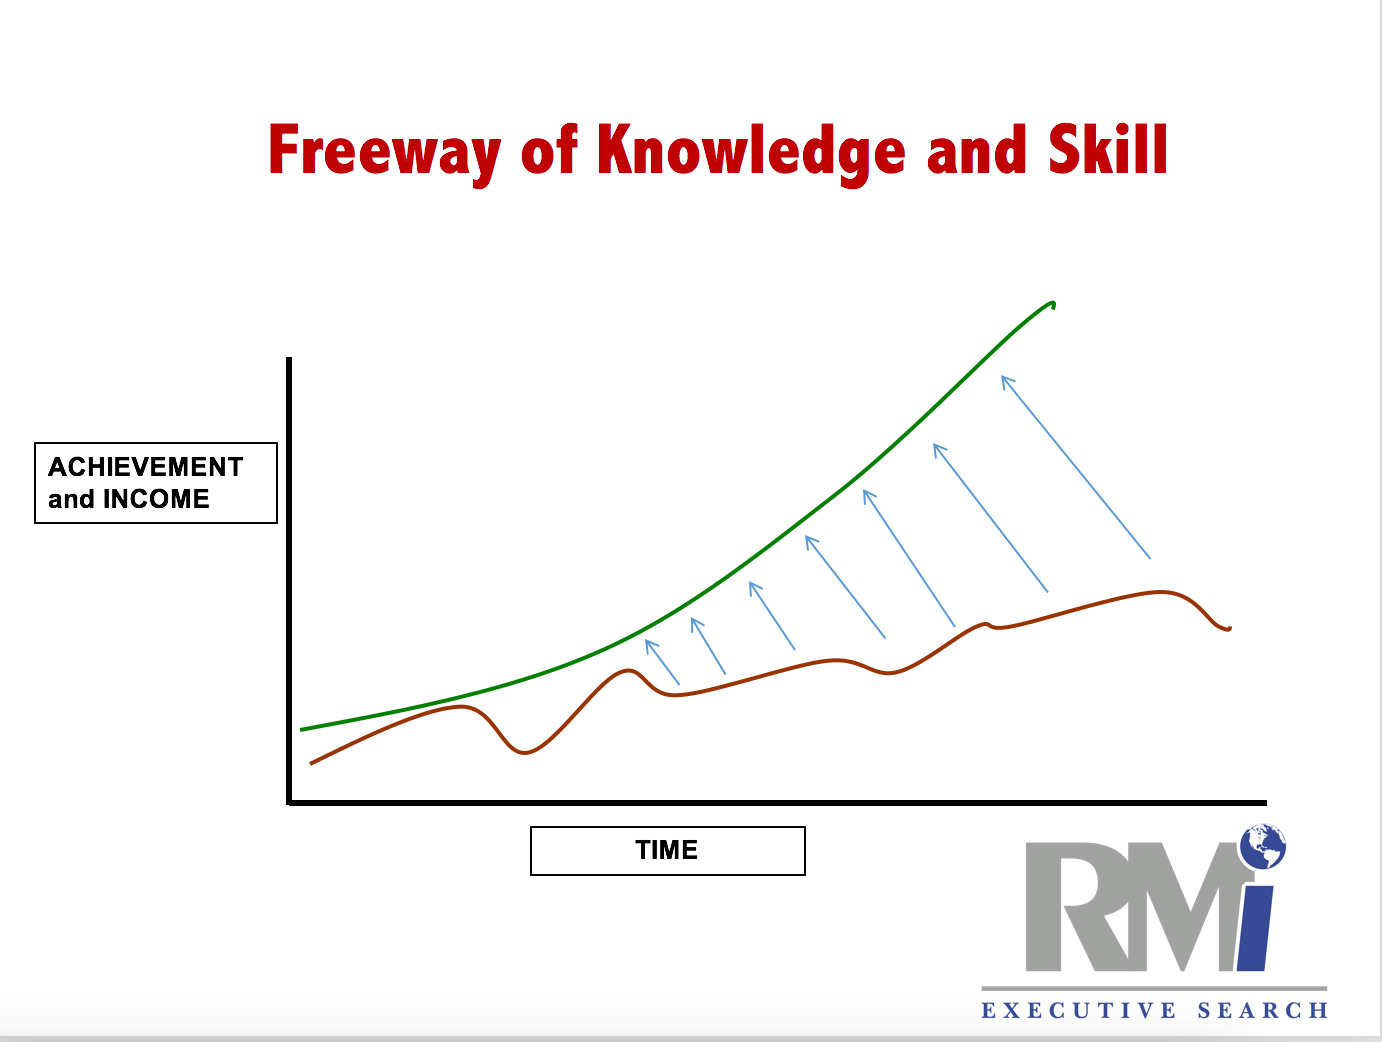 Freeway of Knowledge andSkill - RMi Executive Search